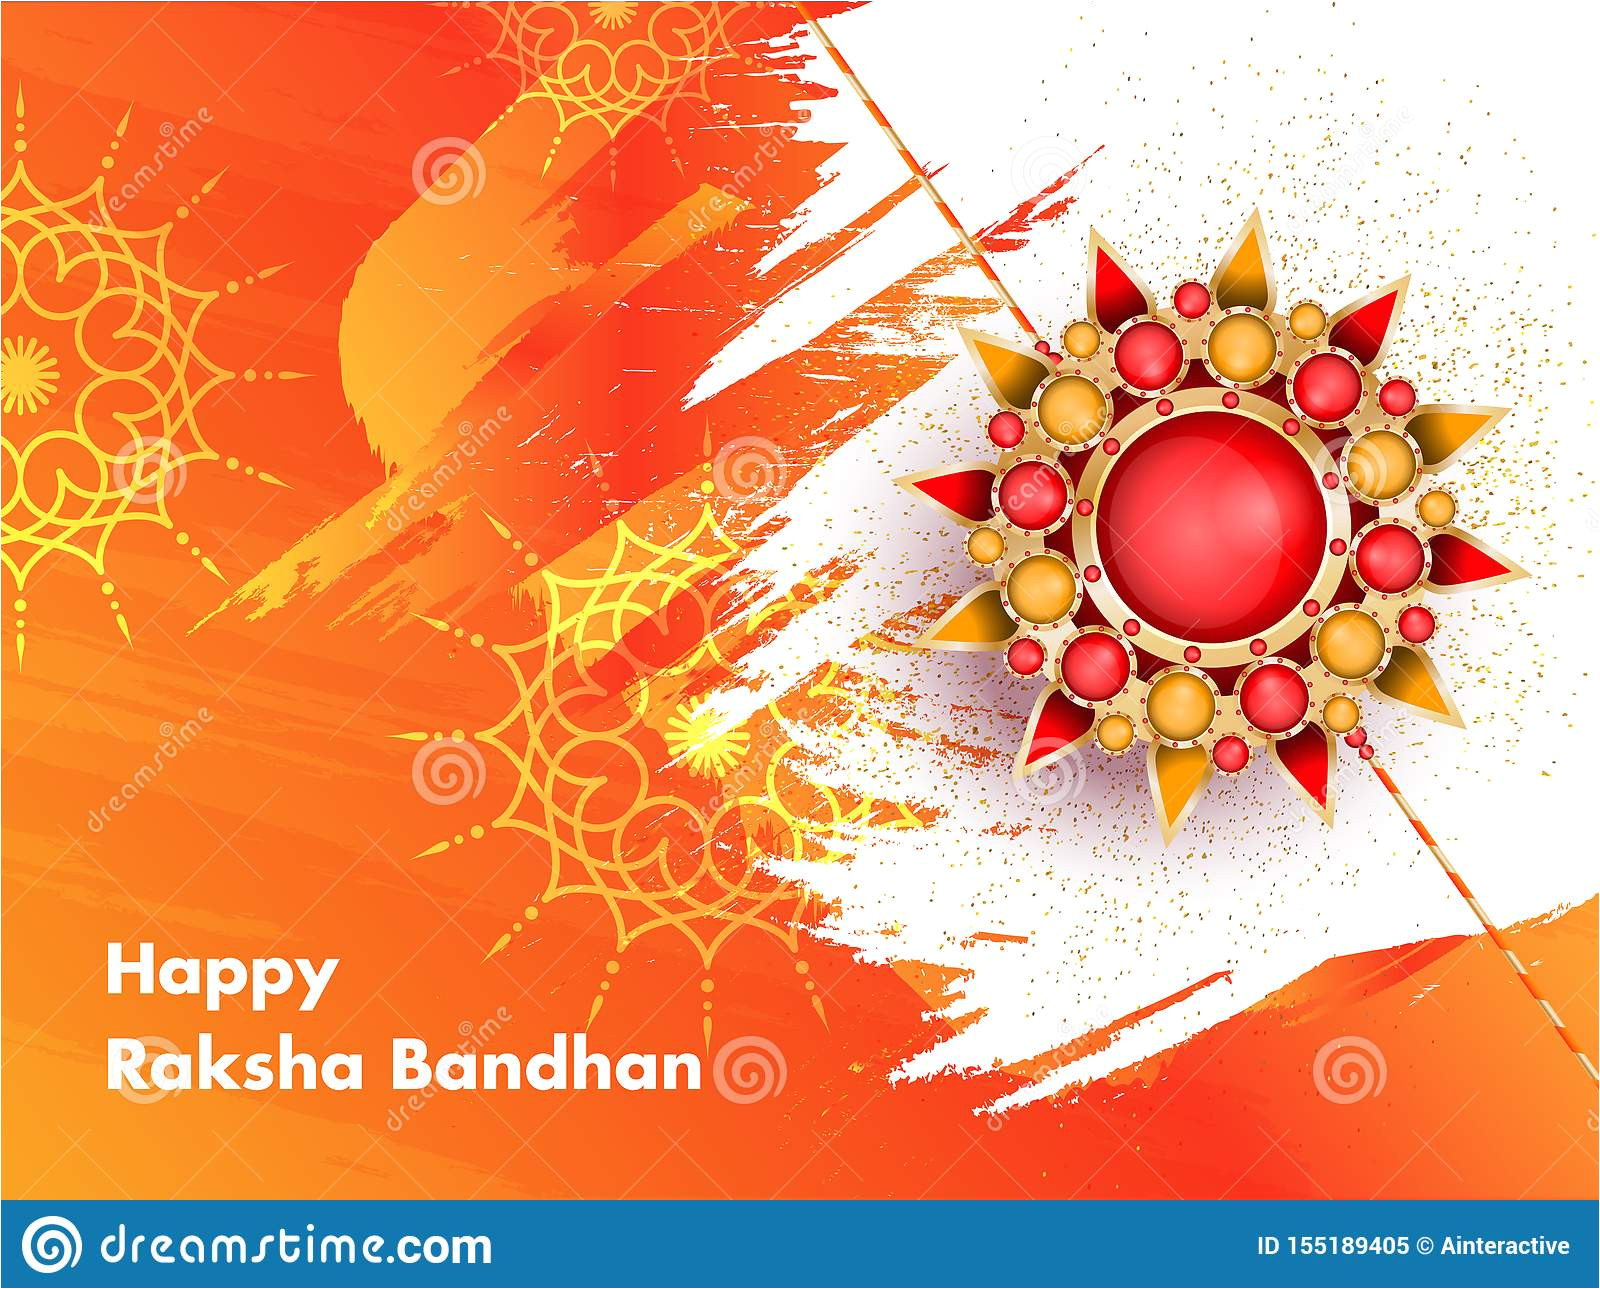 happy raksha bandhan greeting card design beautiful rakhi wristband orange grunge brush stroke background image